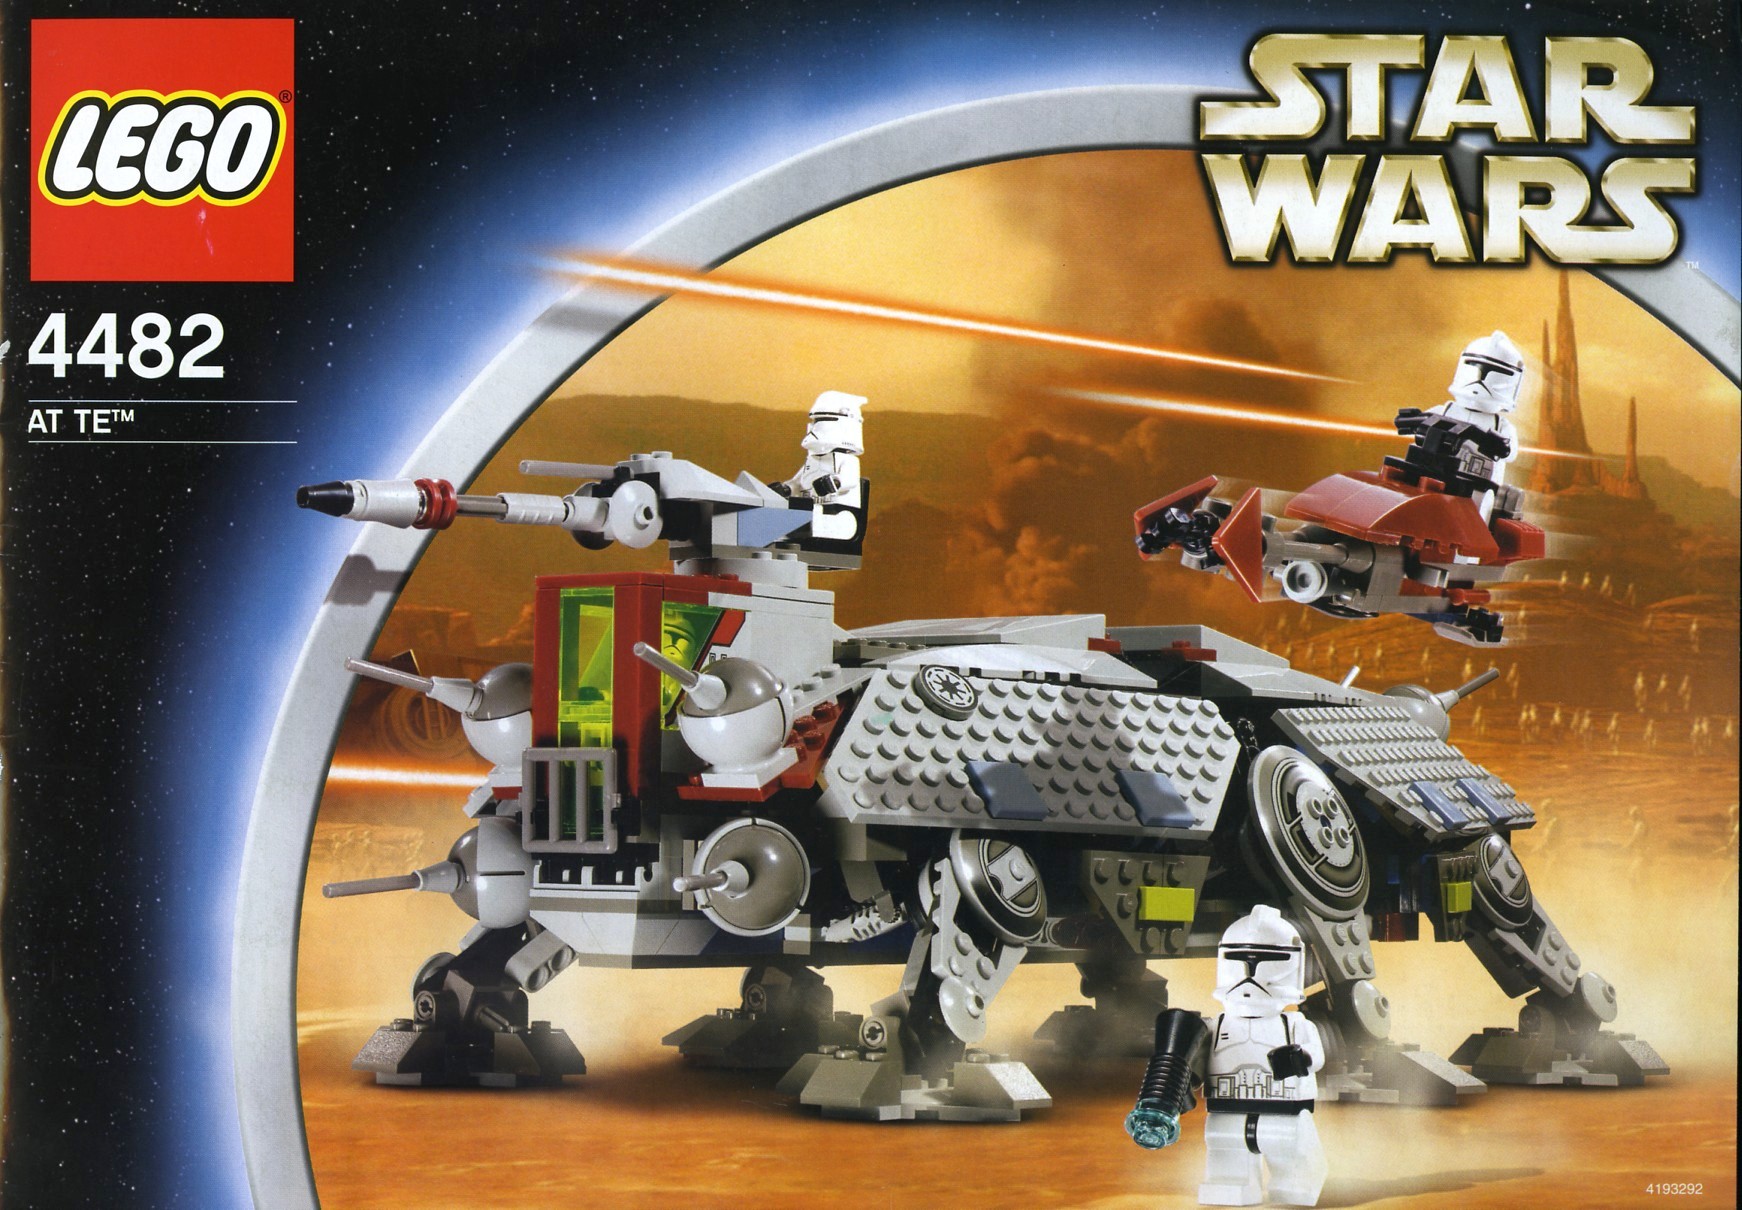 Wars | Brickset: LEGO guide and